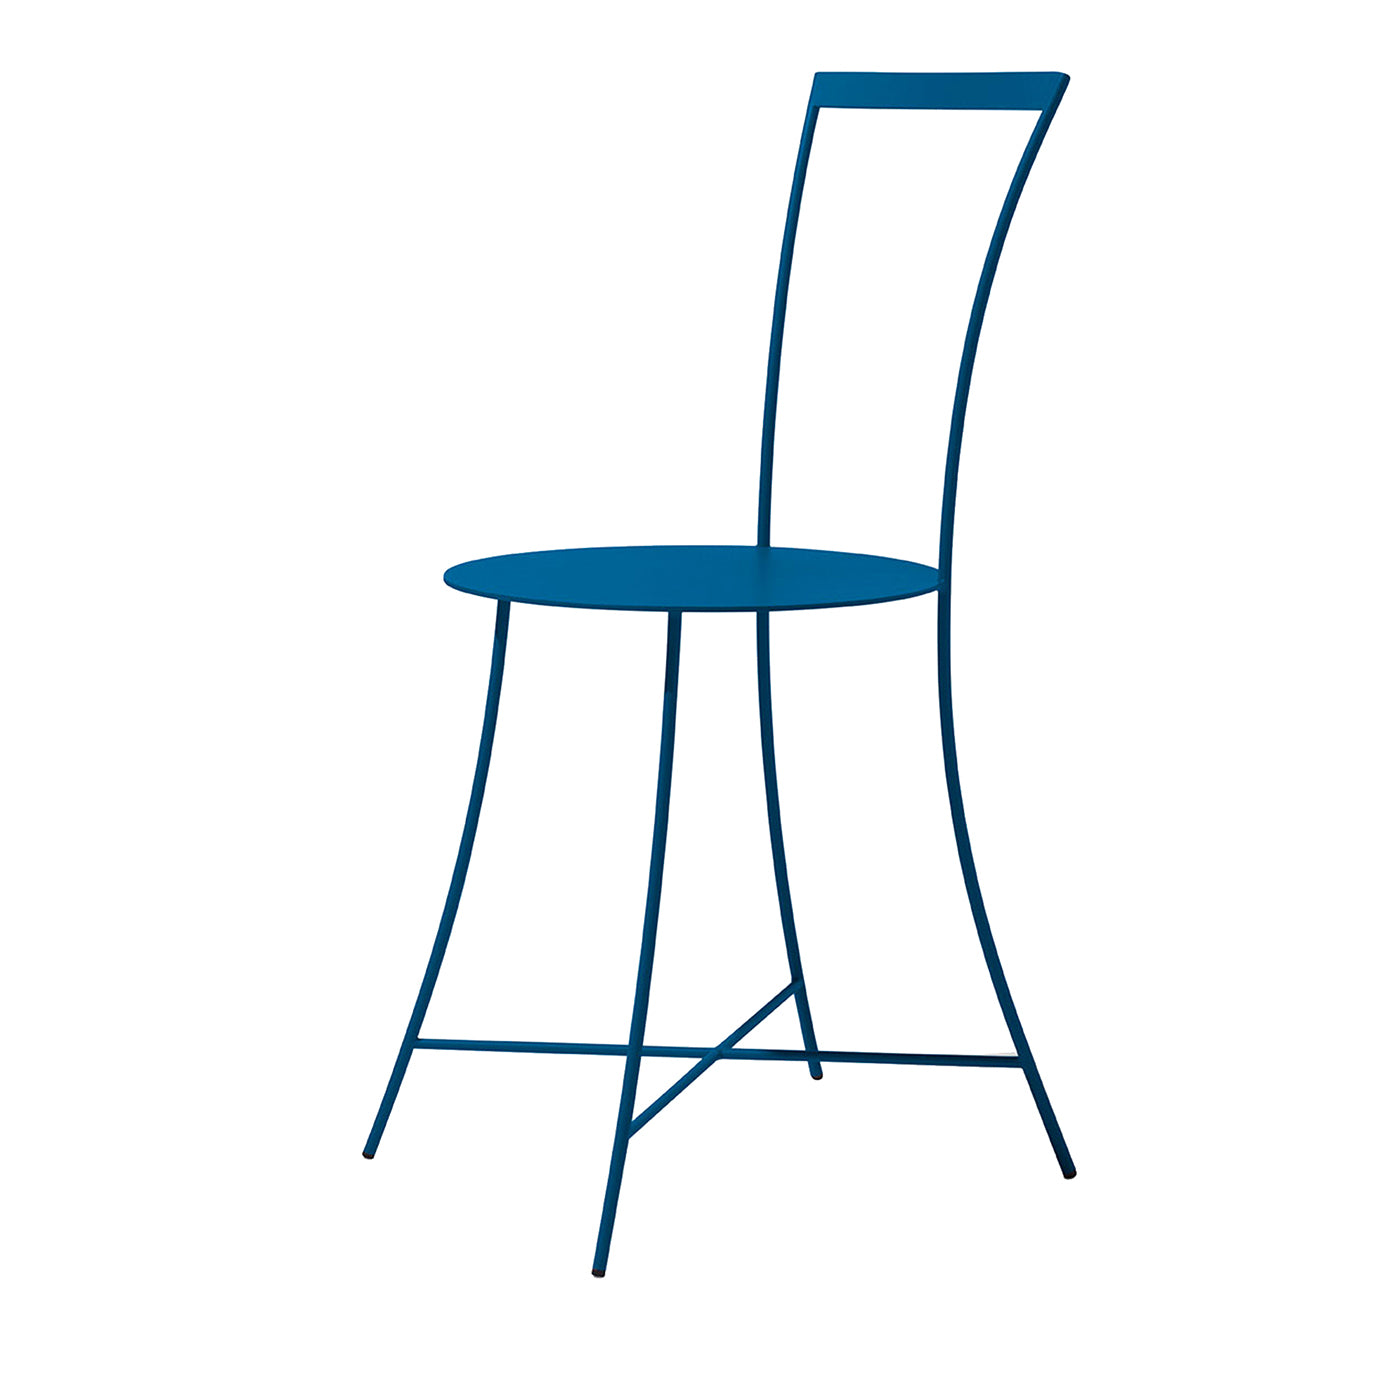 Irma Blue Chair by Mario Scairato - Main view